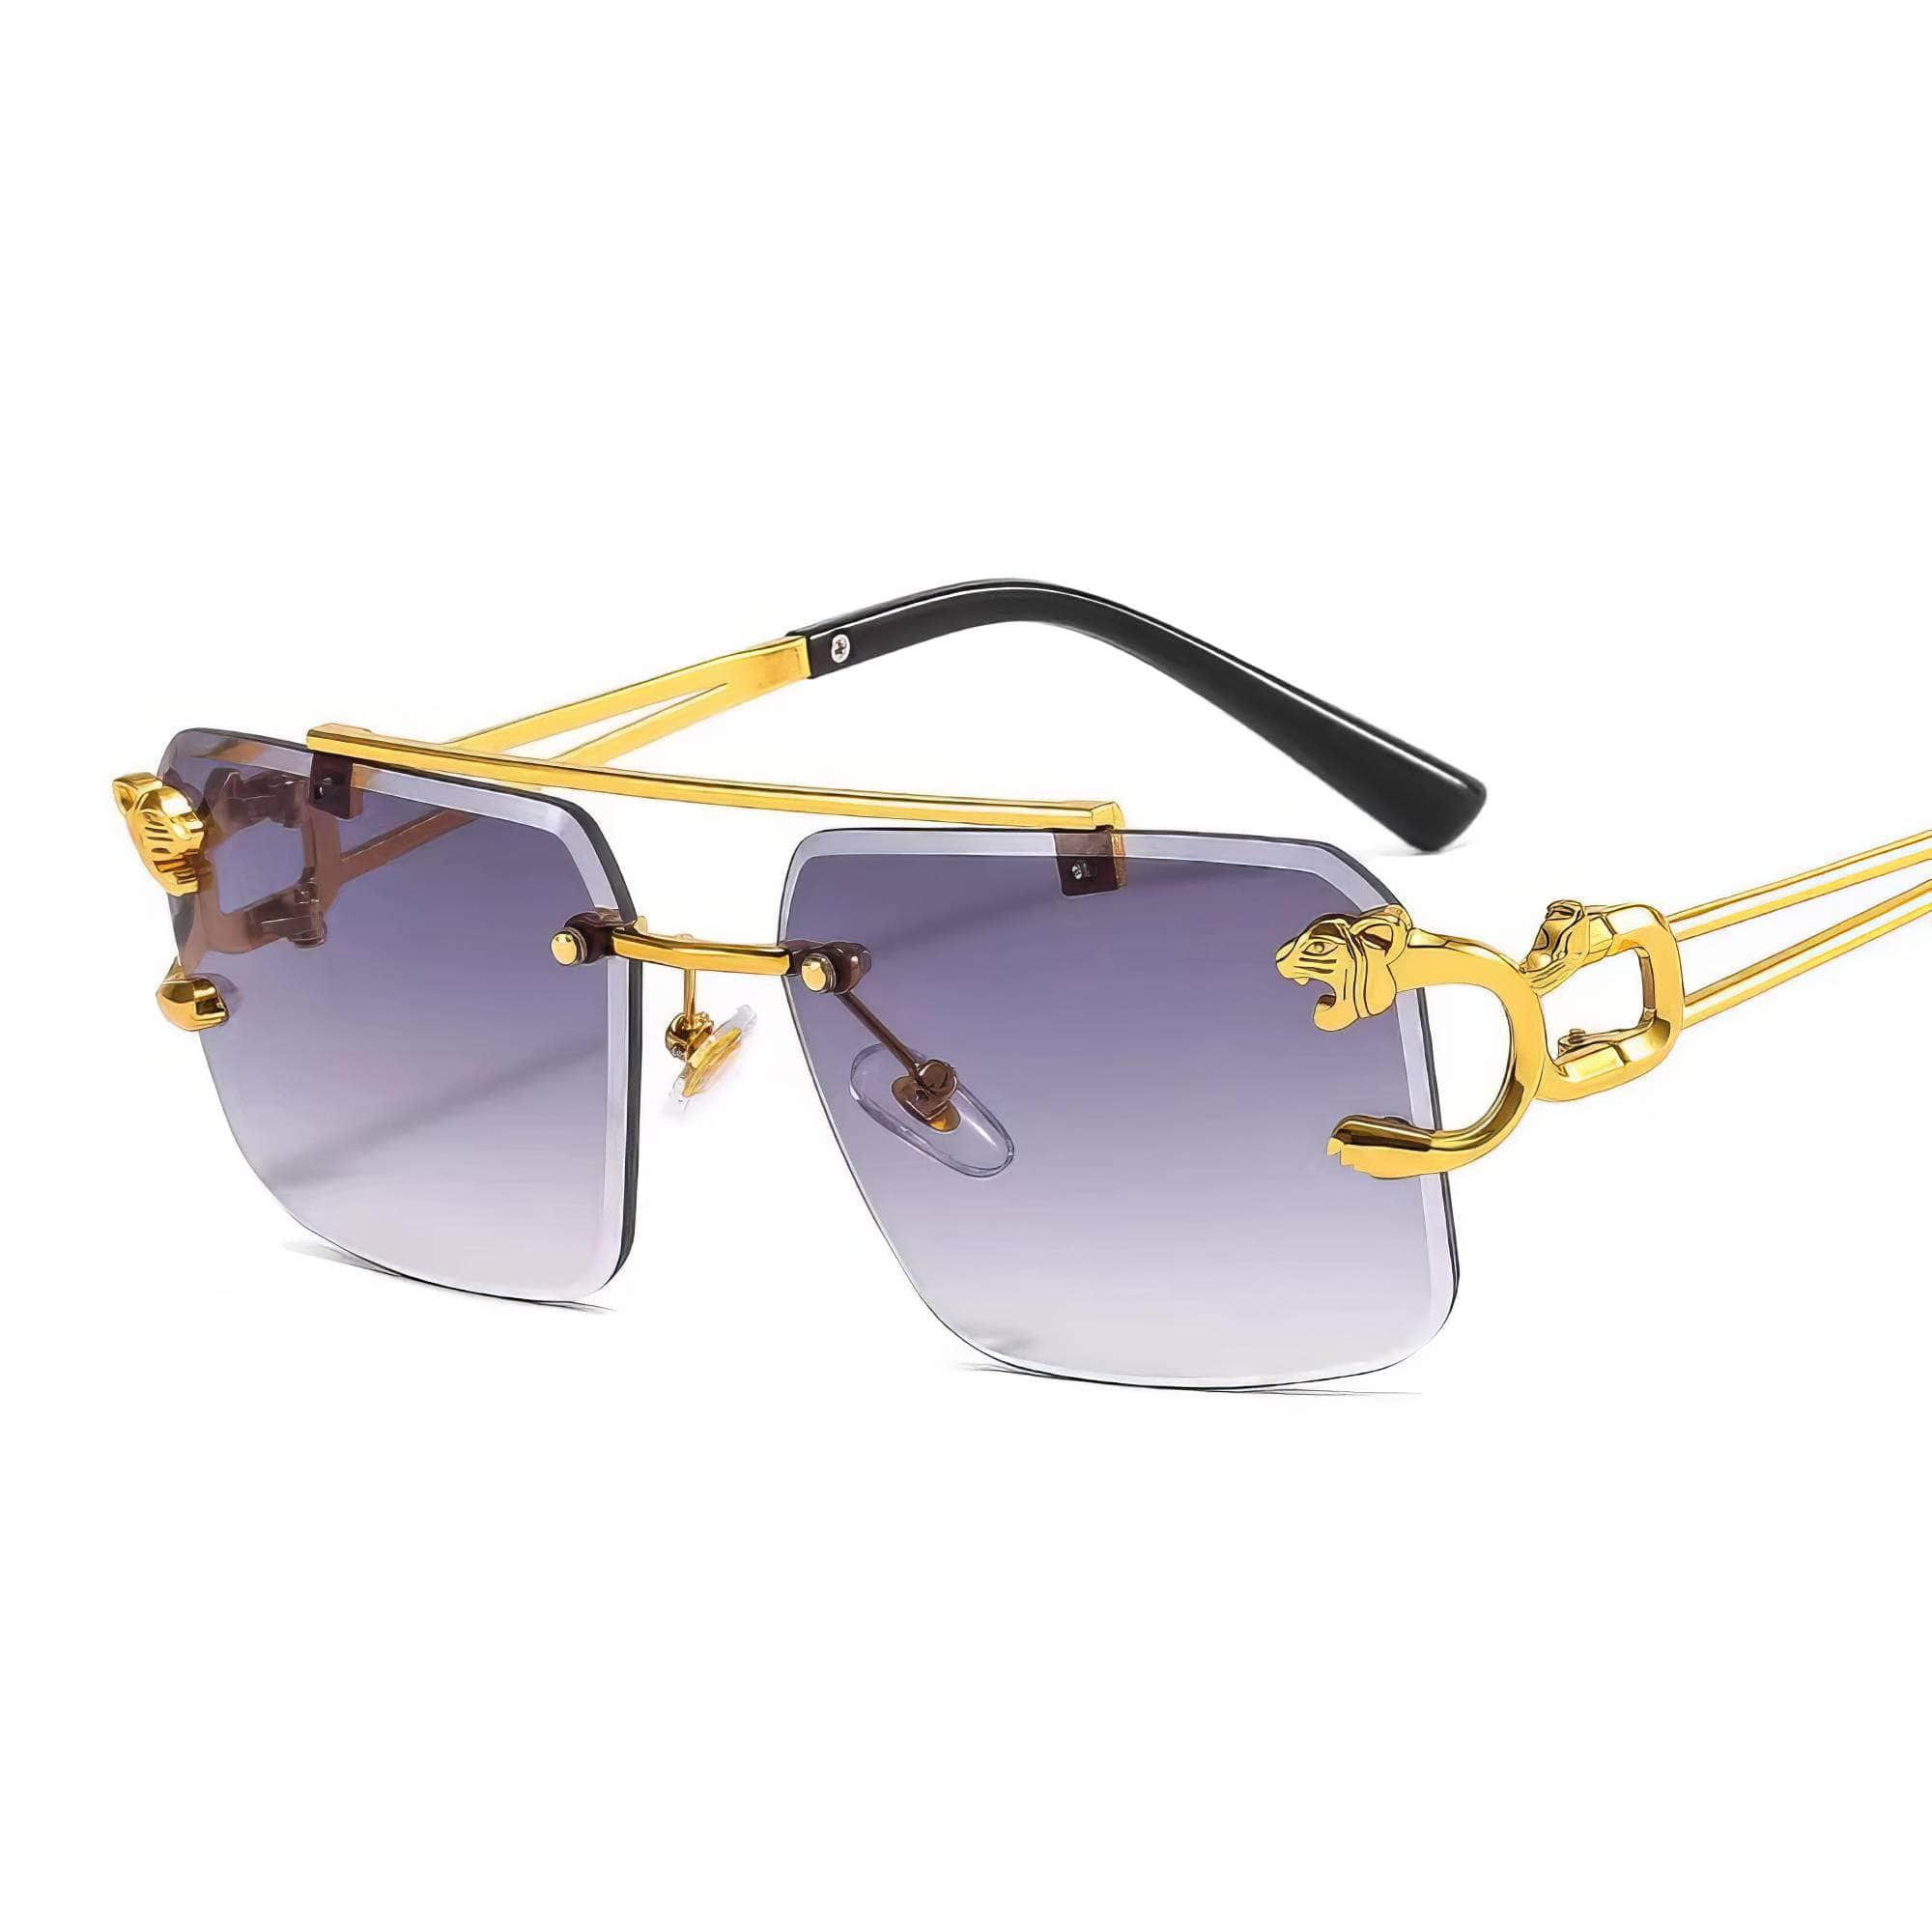 Fashion Square Double Bridge Eyewear Purple/Gold / Resin